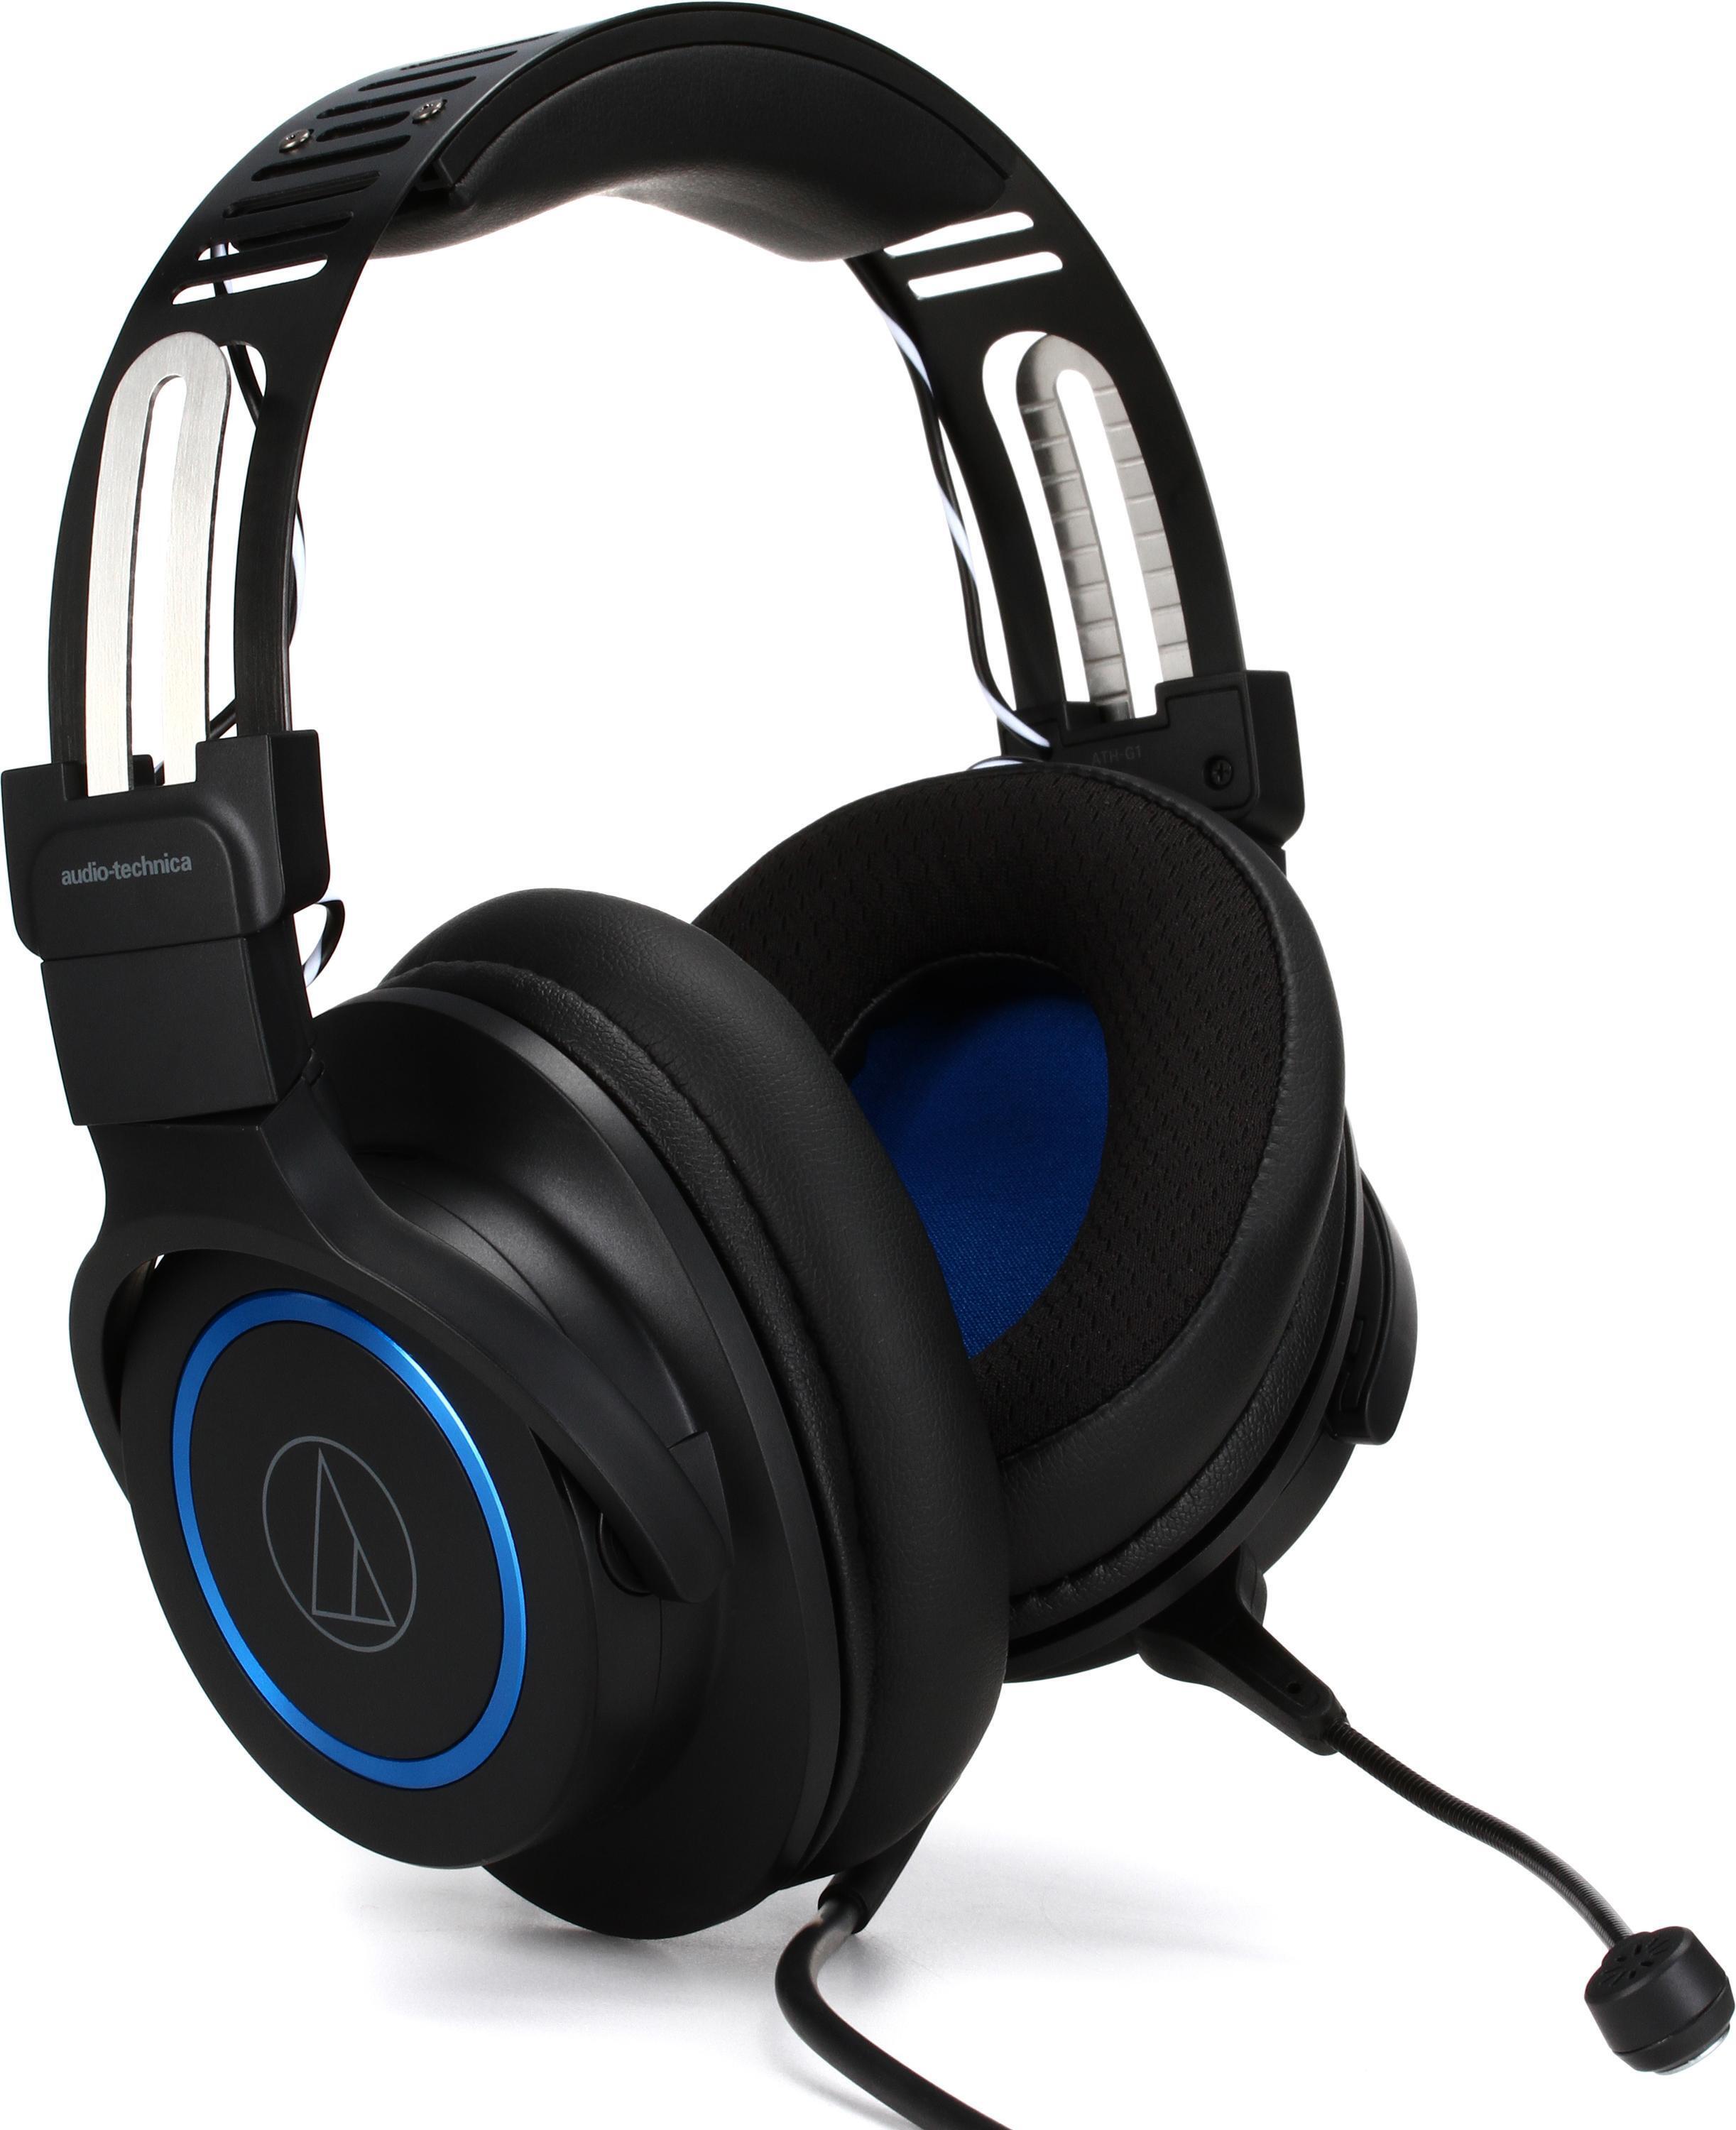 Audio-Technica ATH-G1 Premium Headset with Detachable Mic, 3.5